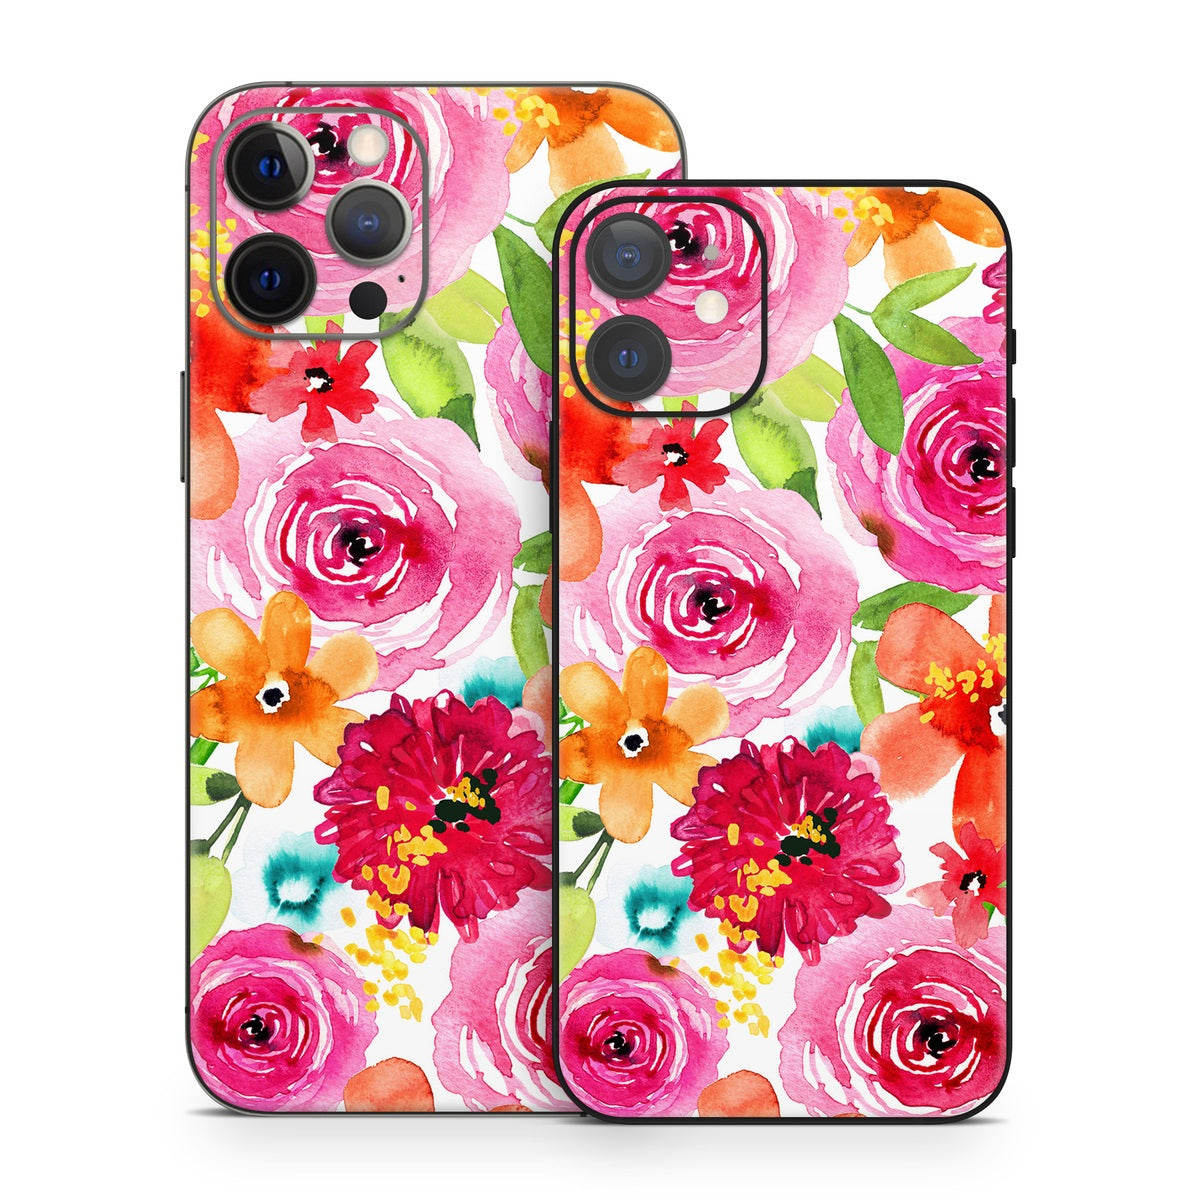 Floral Pop - Apple iPhone 12 Skin